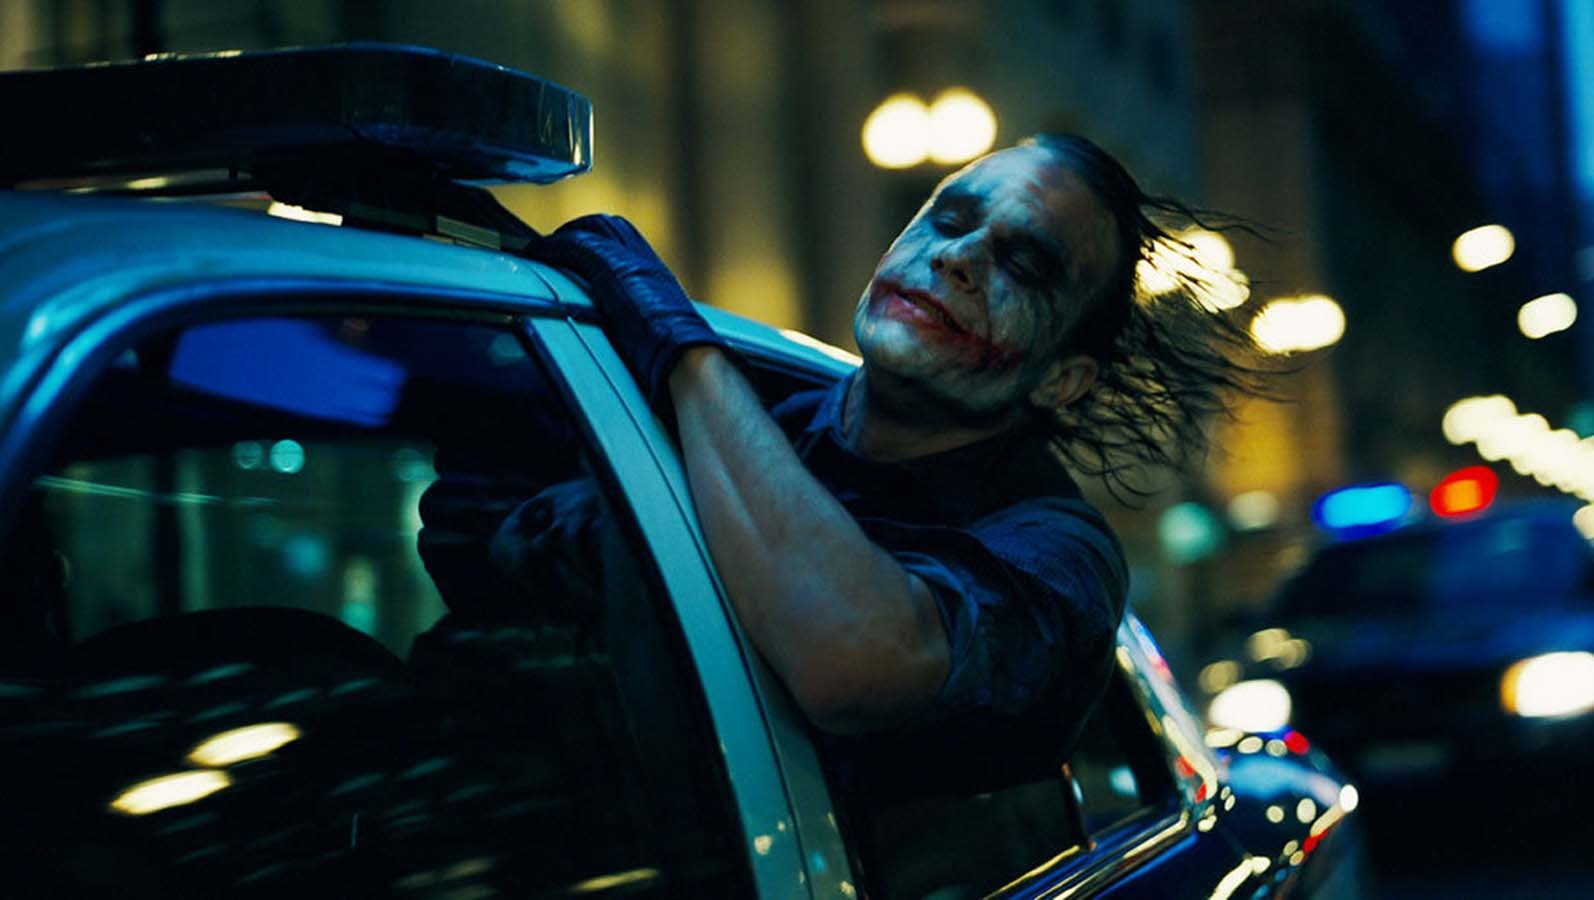 Hd Wallpaper Heath Ledger Joker The Dark Knight Illuminated - Heath Ledger Joker Wallpaper Hd - HD Wallpaper 